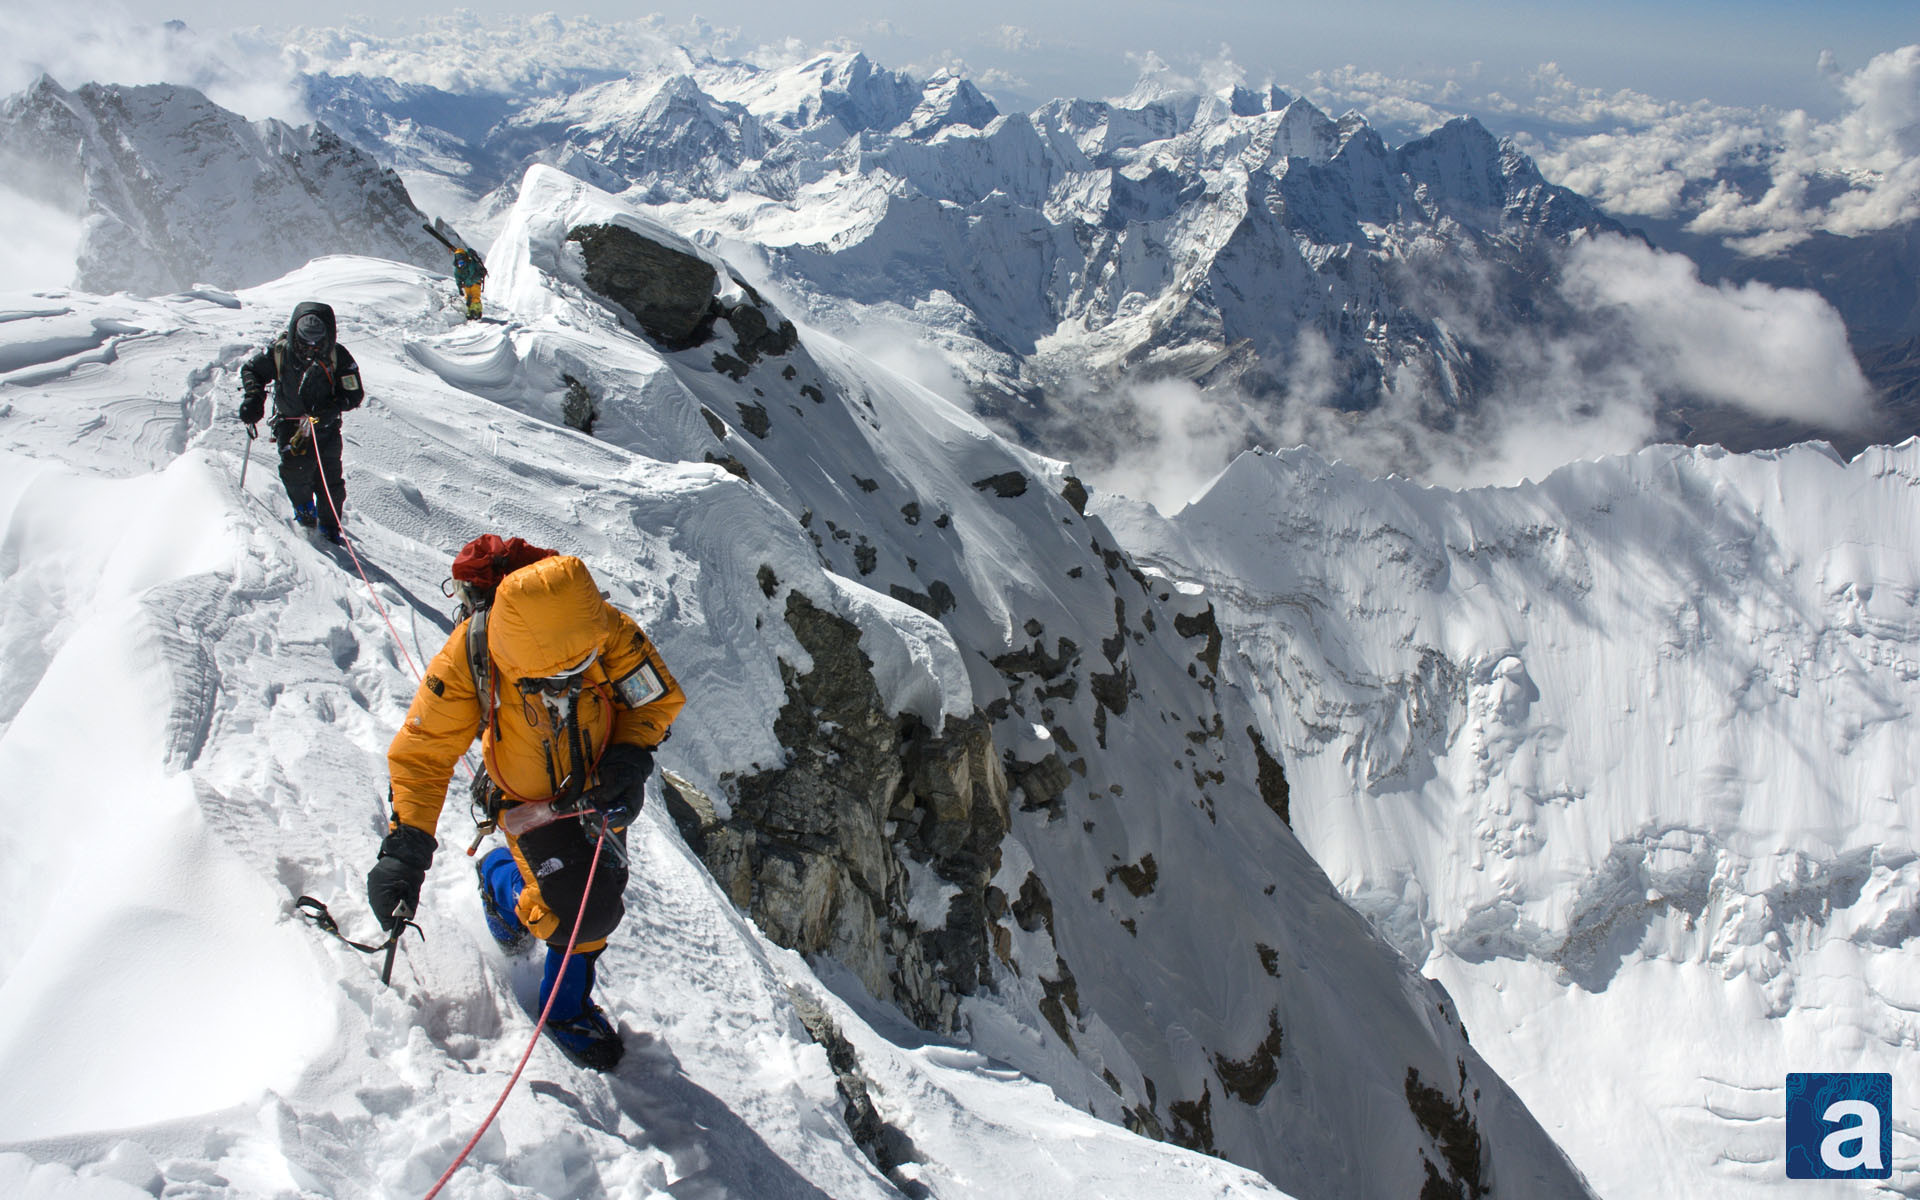 adventure journal – Wallpaper Wednesday: Mount Everest Summit